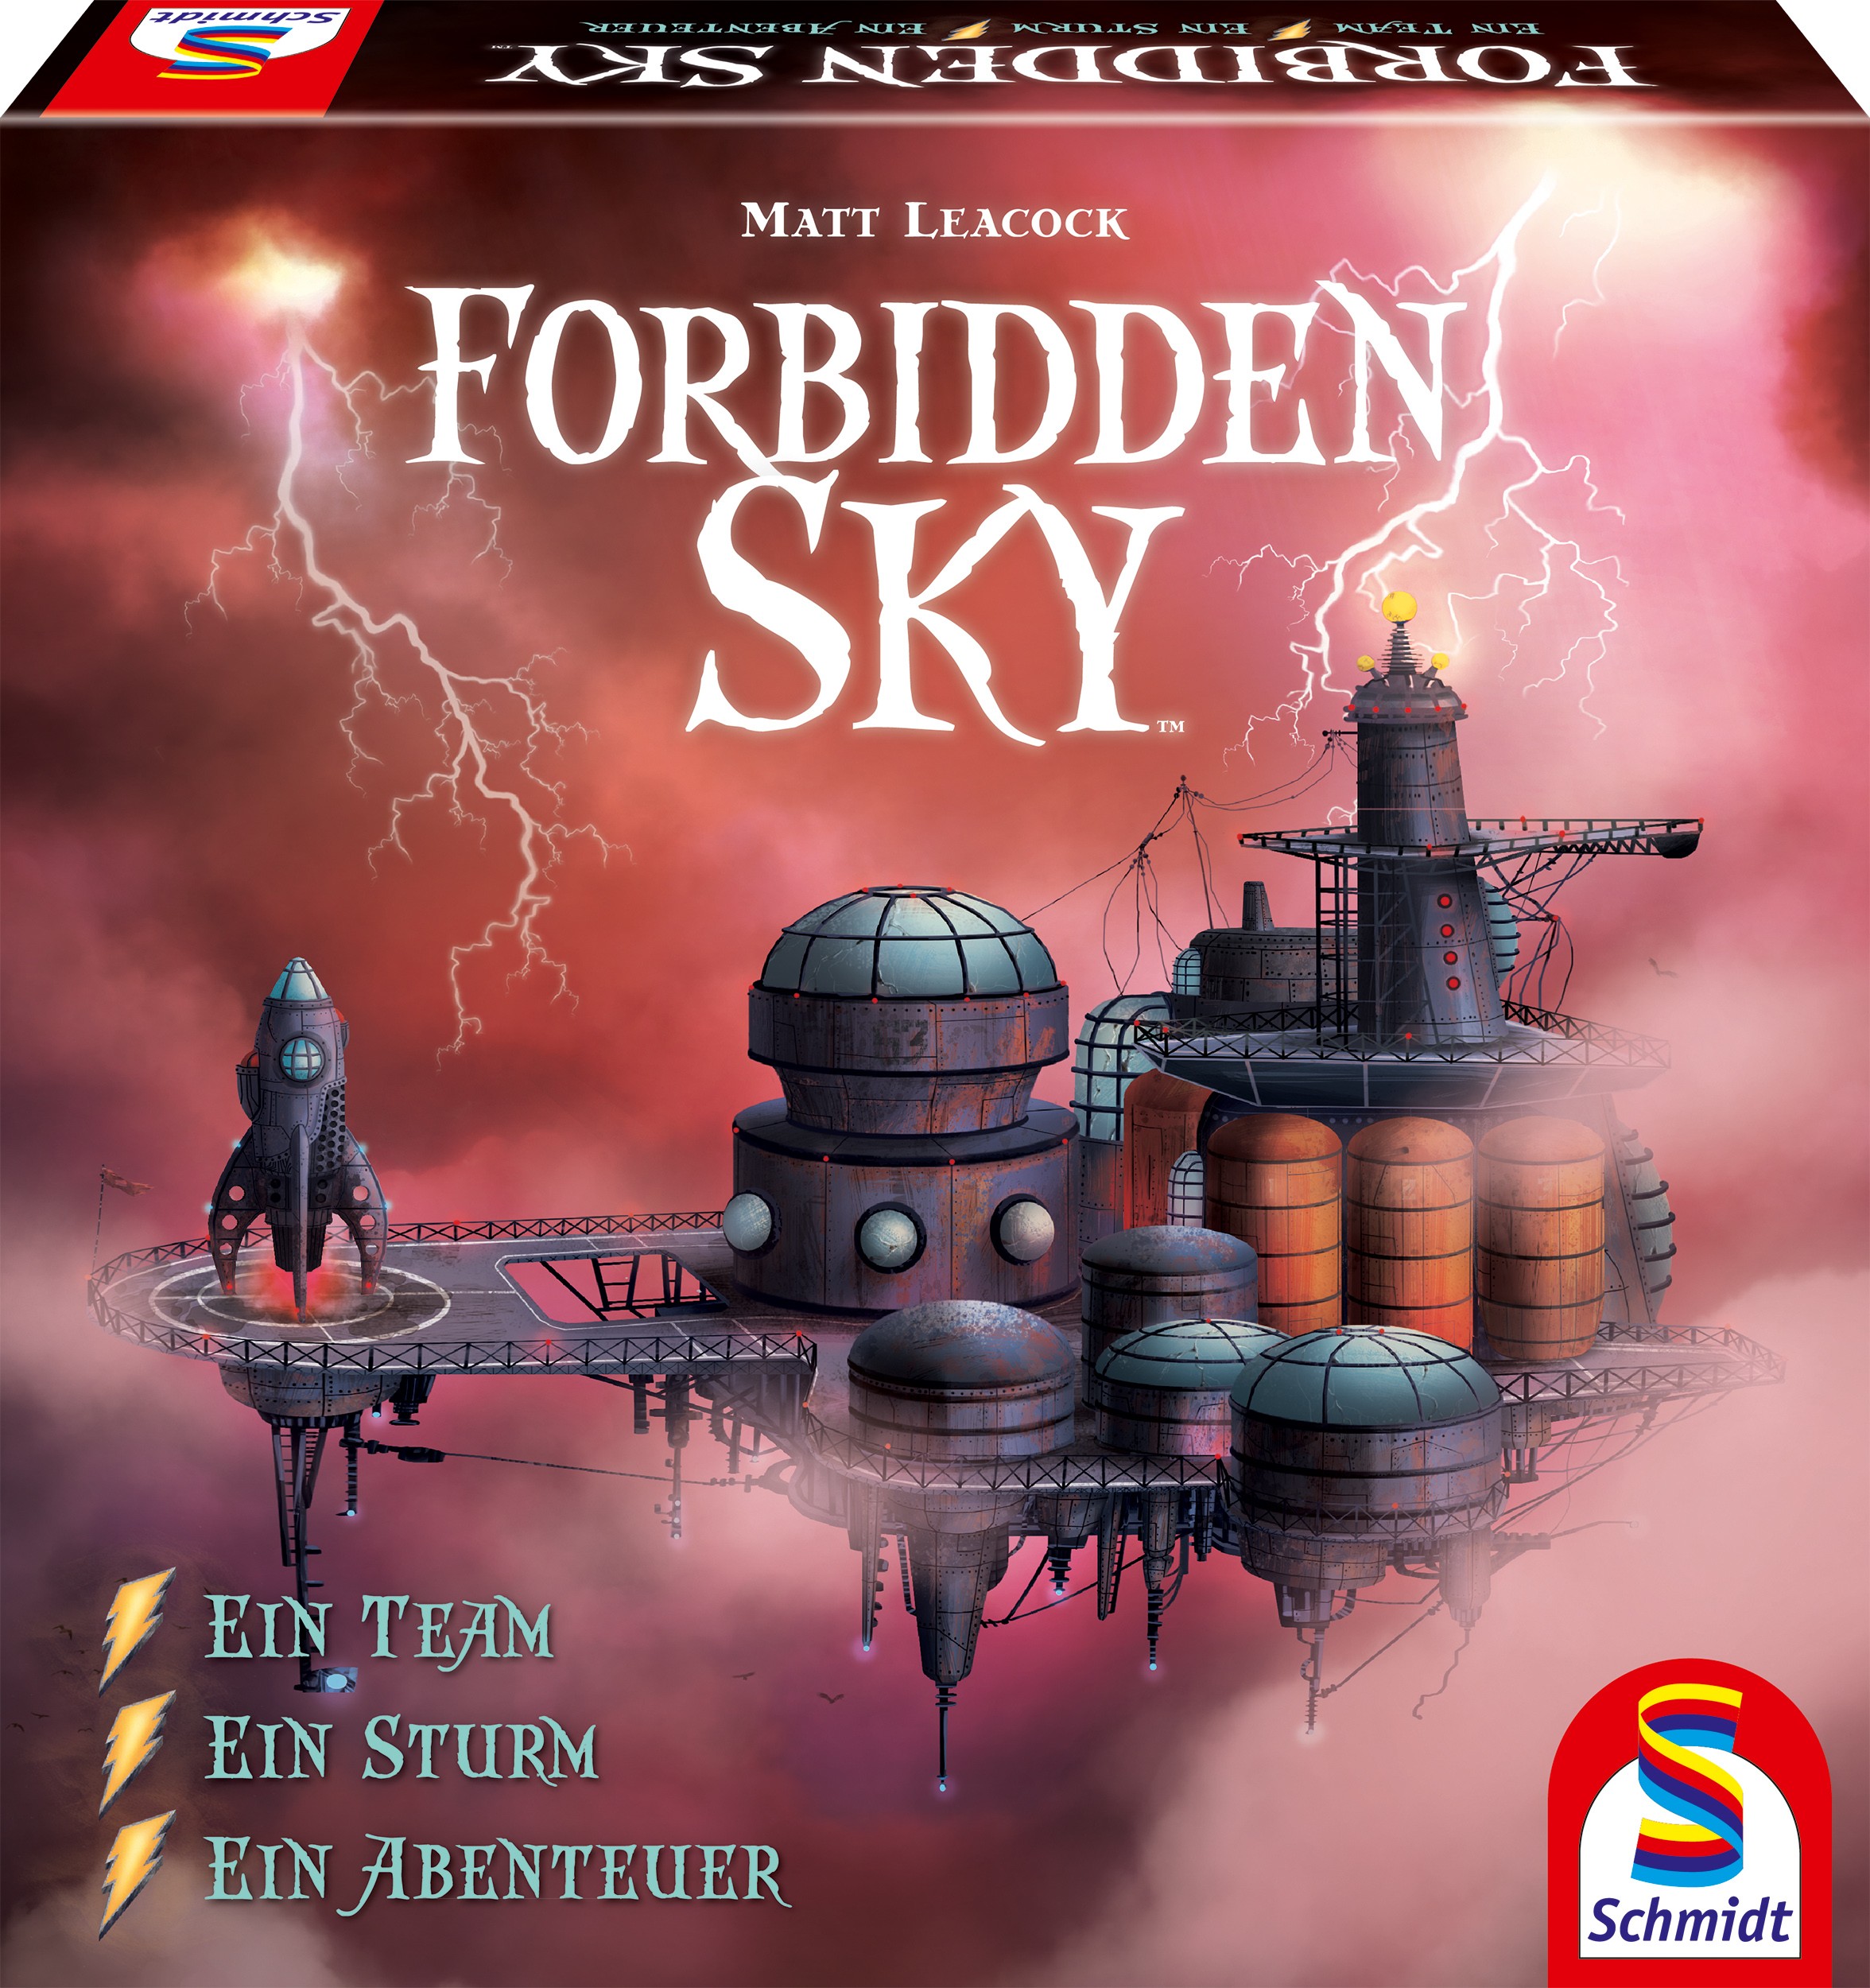 Forbidden Sky